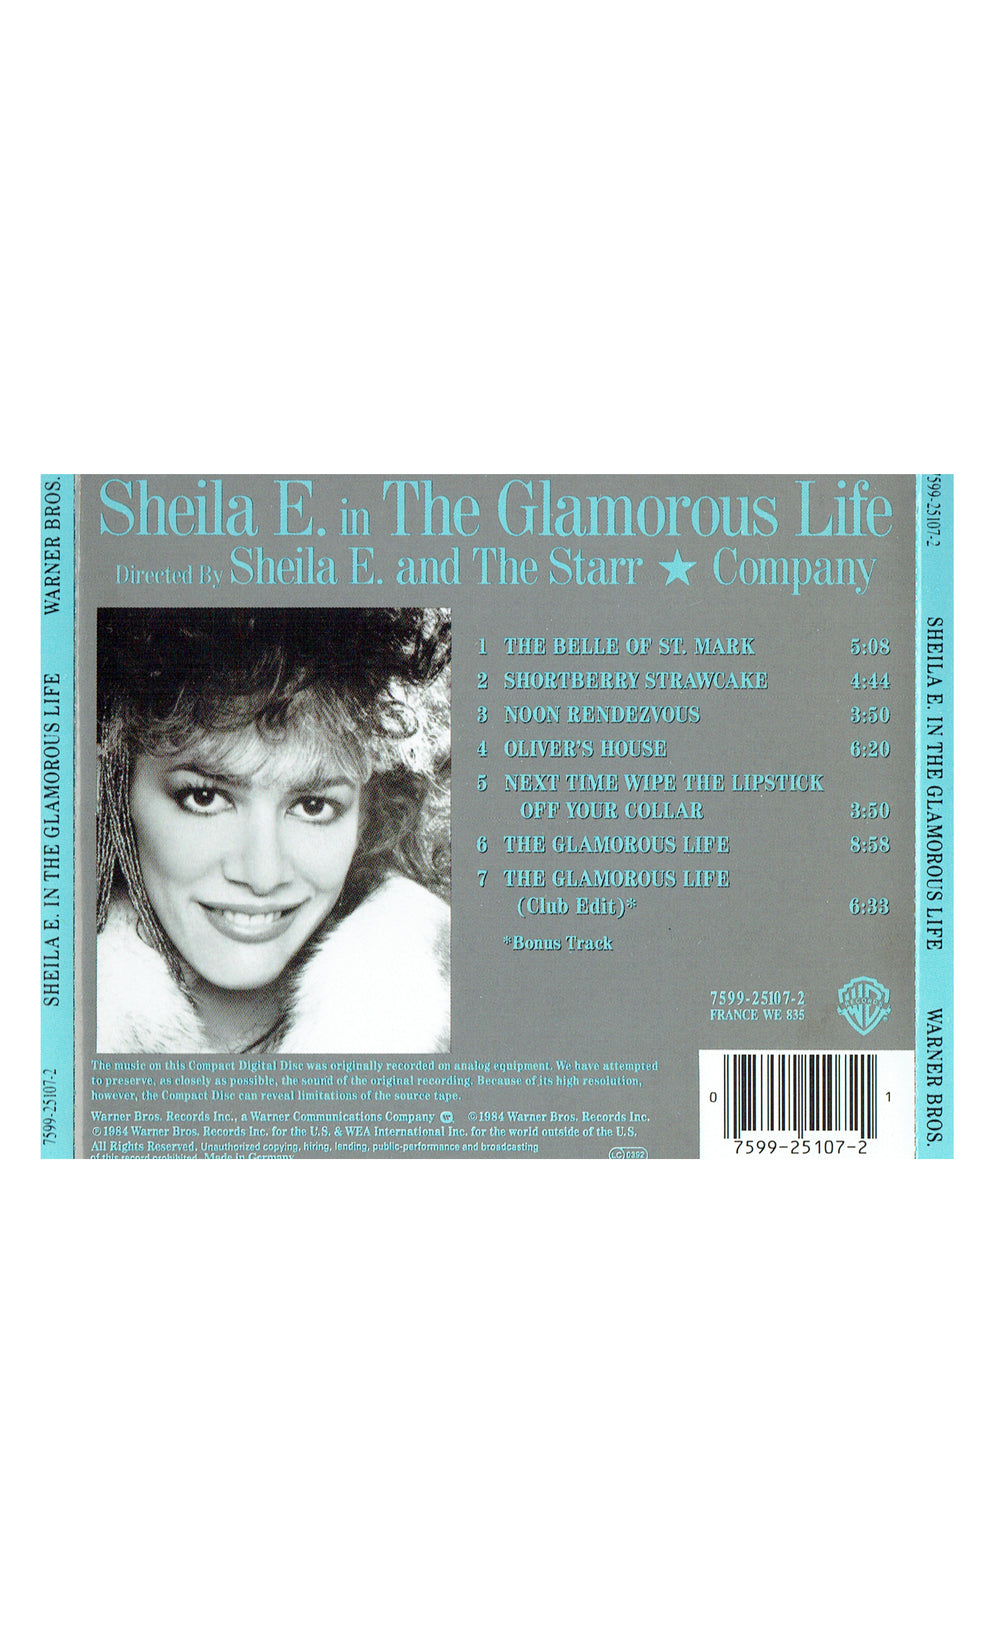 Prince – Sheila E In The Glamorous Life CD Album 7 Tracks USA Inc Bonus Club Edit Prince